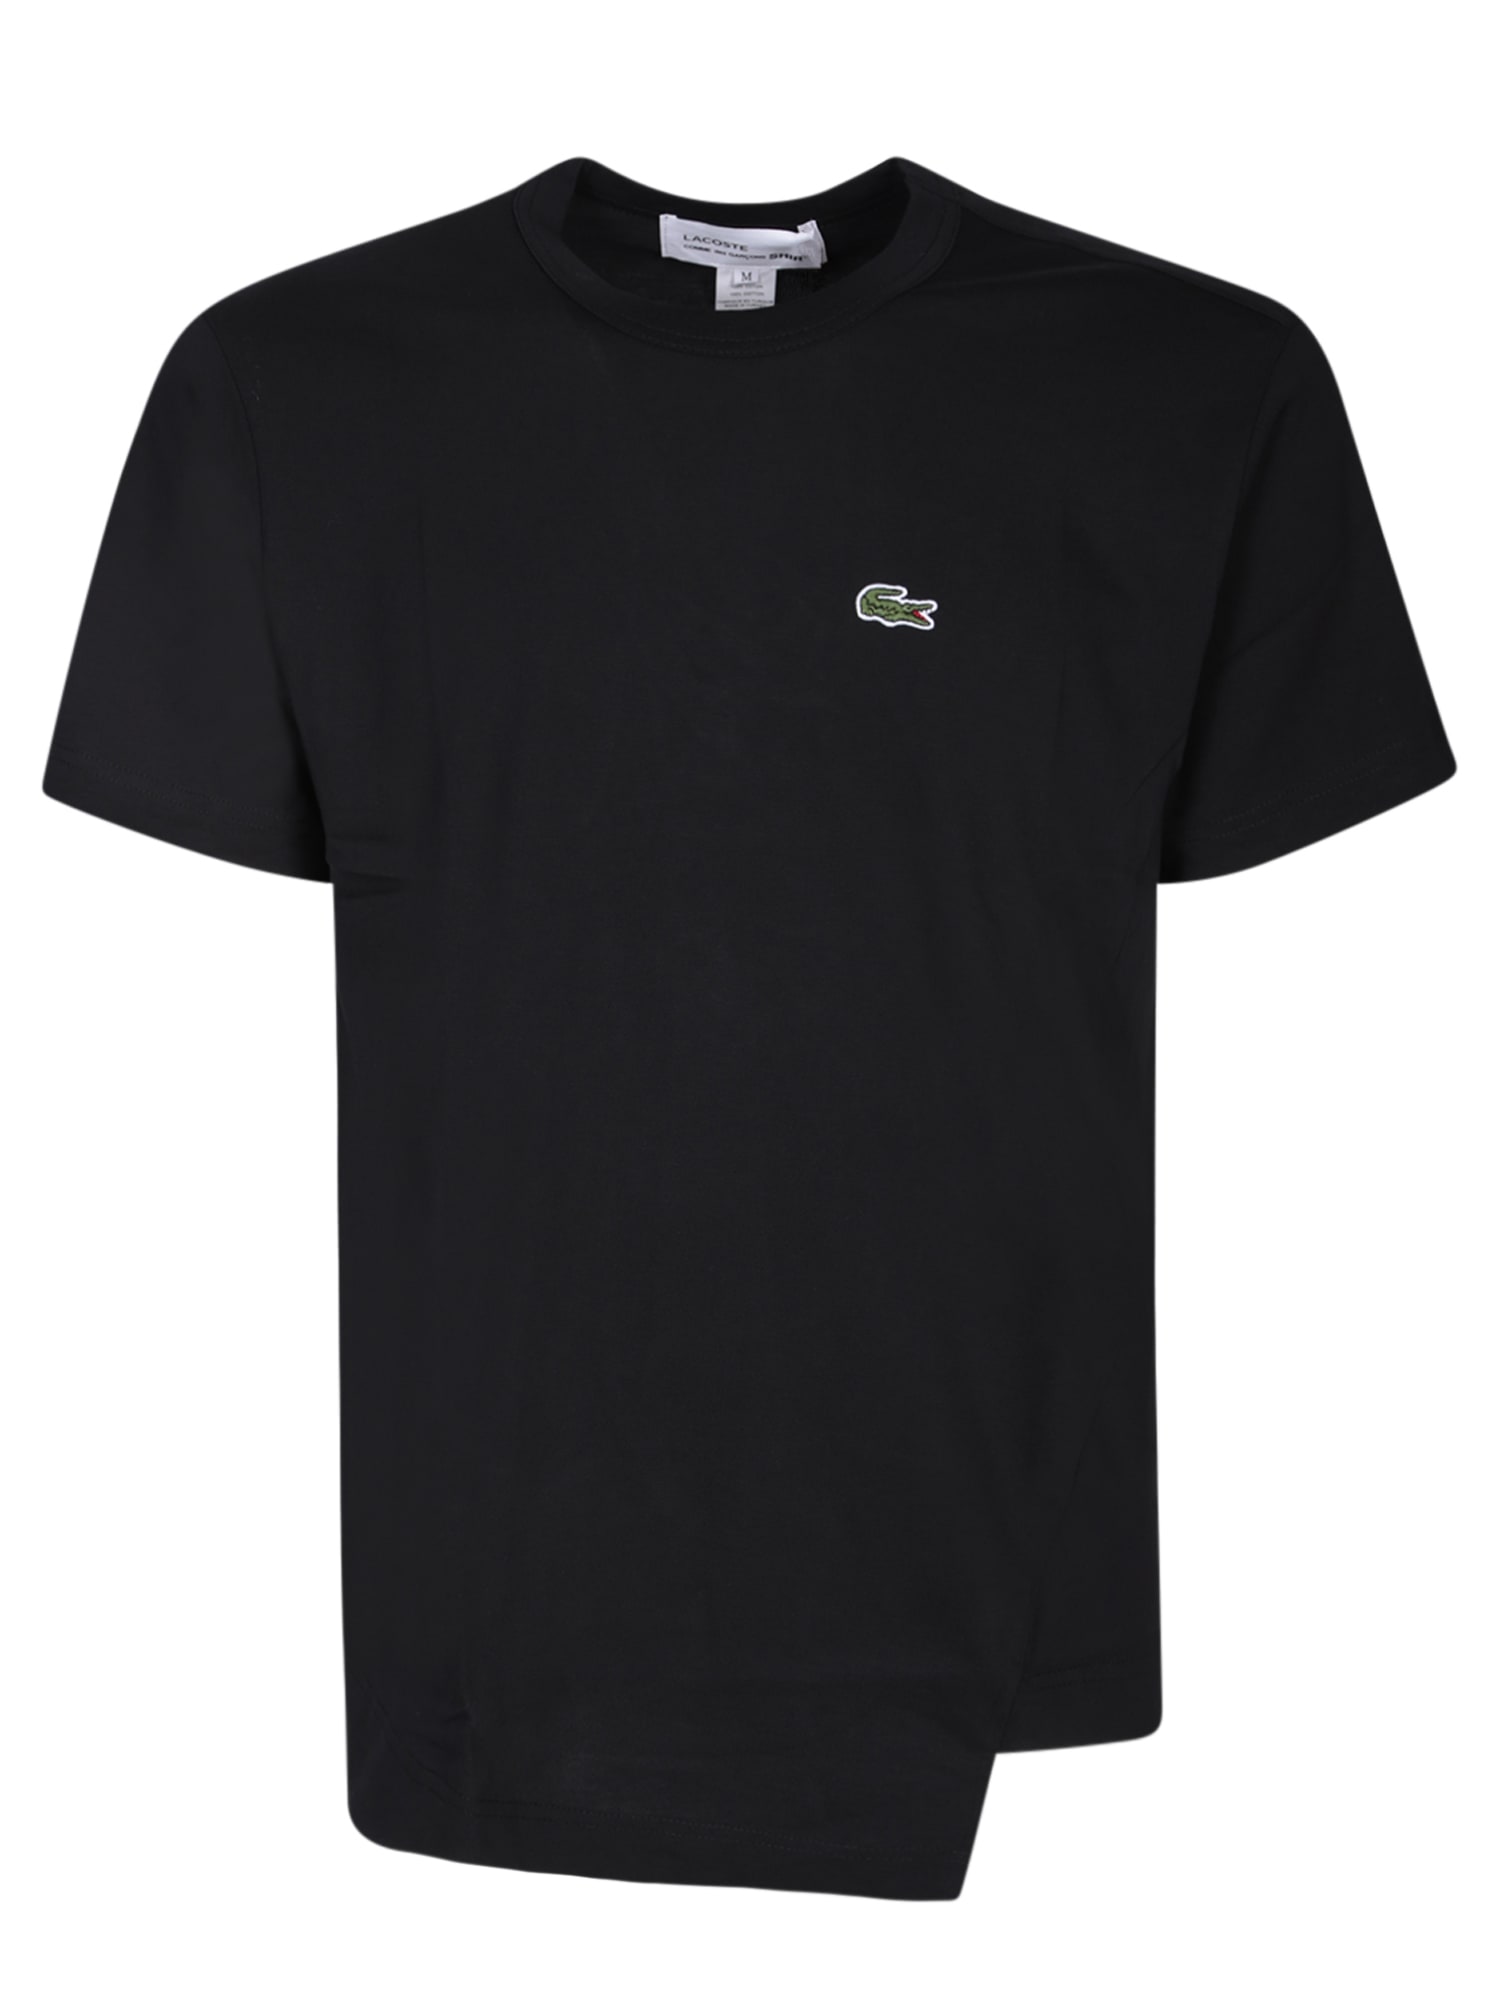 Asymmetric Black T-shirt